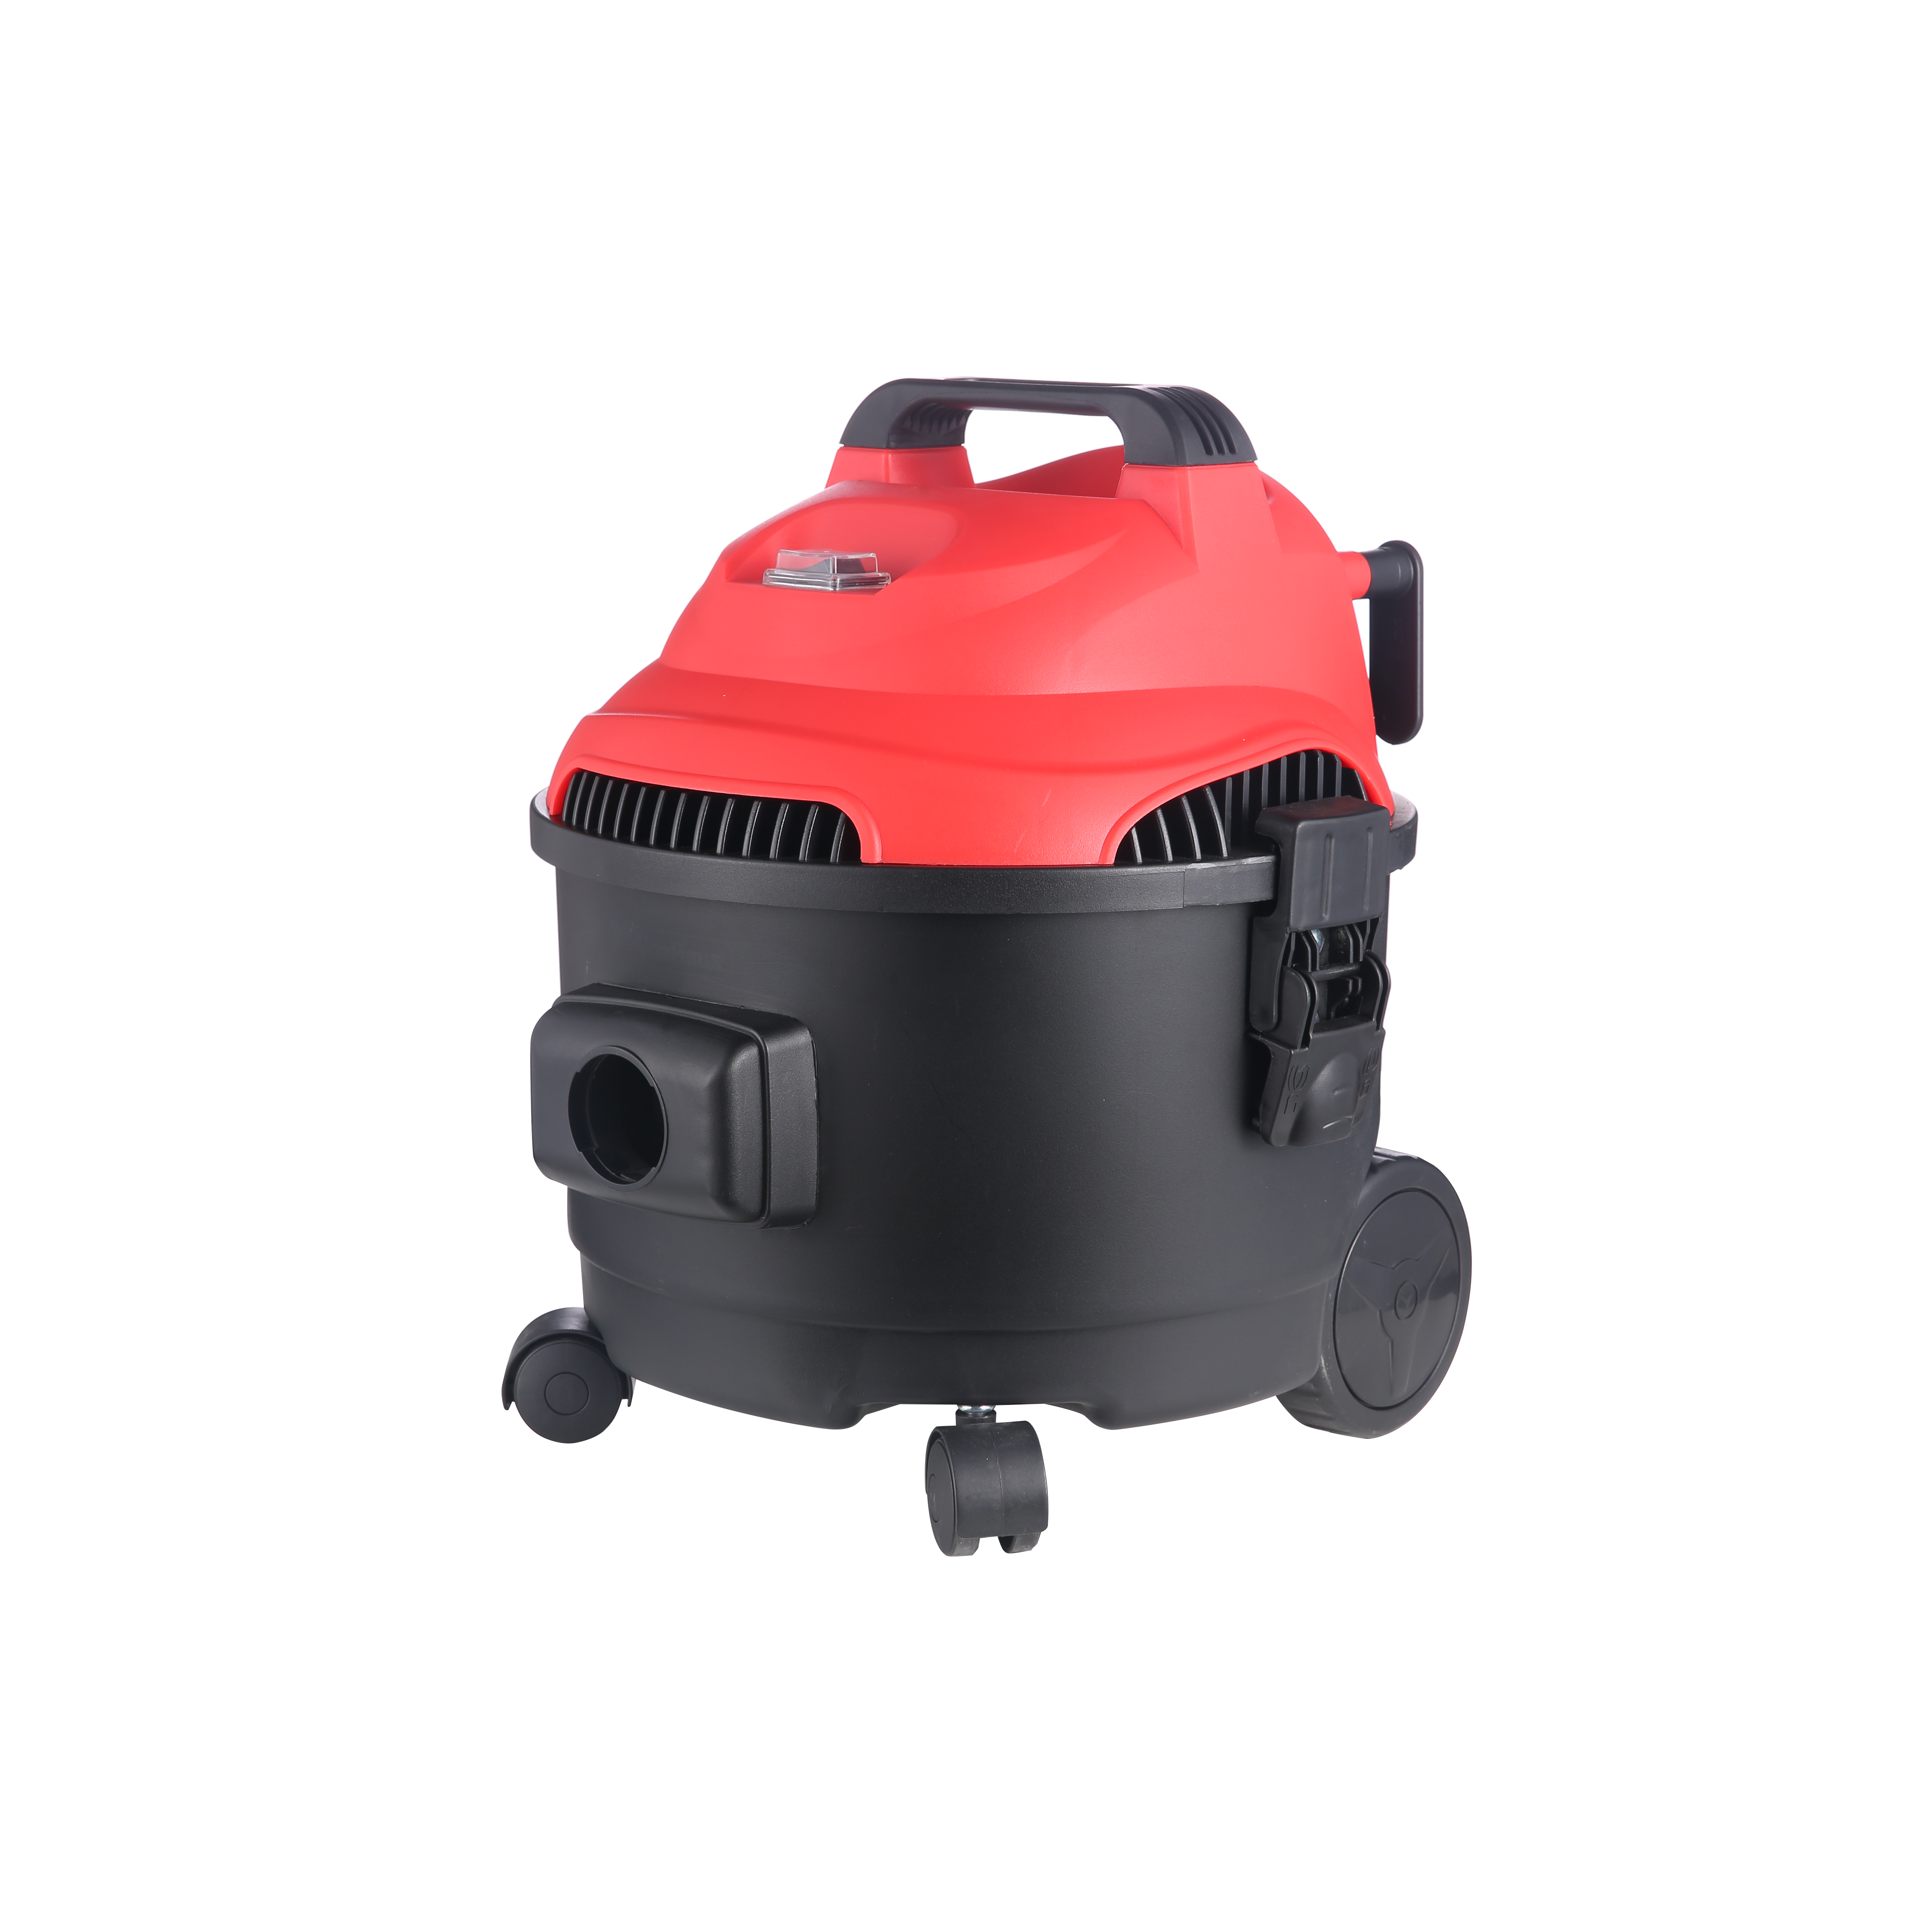 RL128 high quality bagless hepa filter cyclone vacuum cleaner